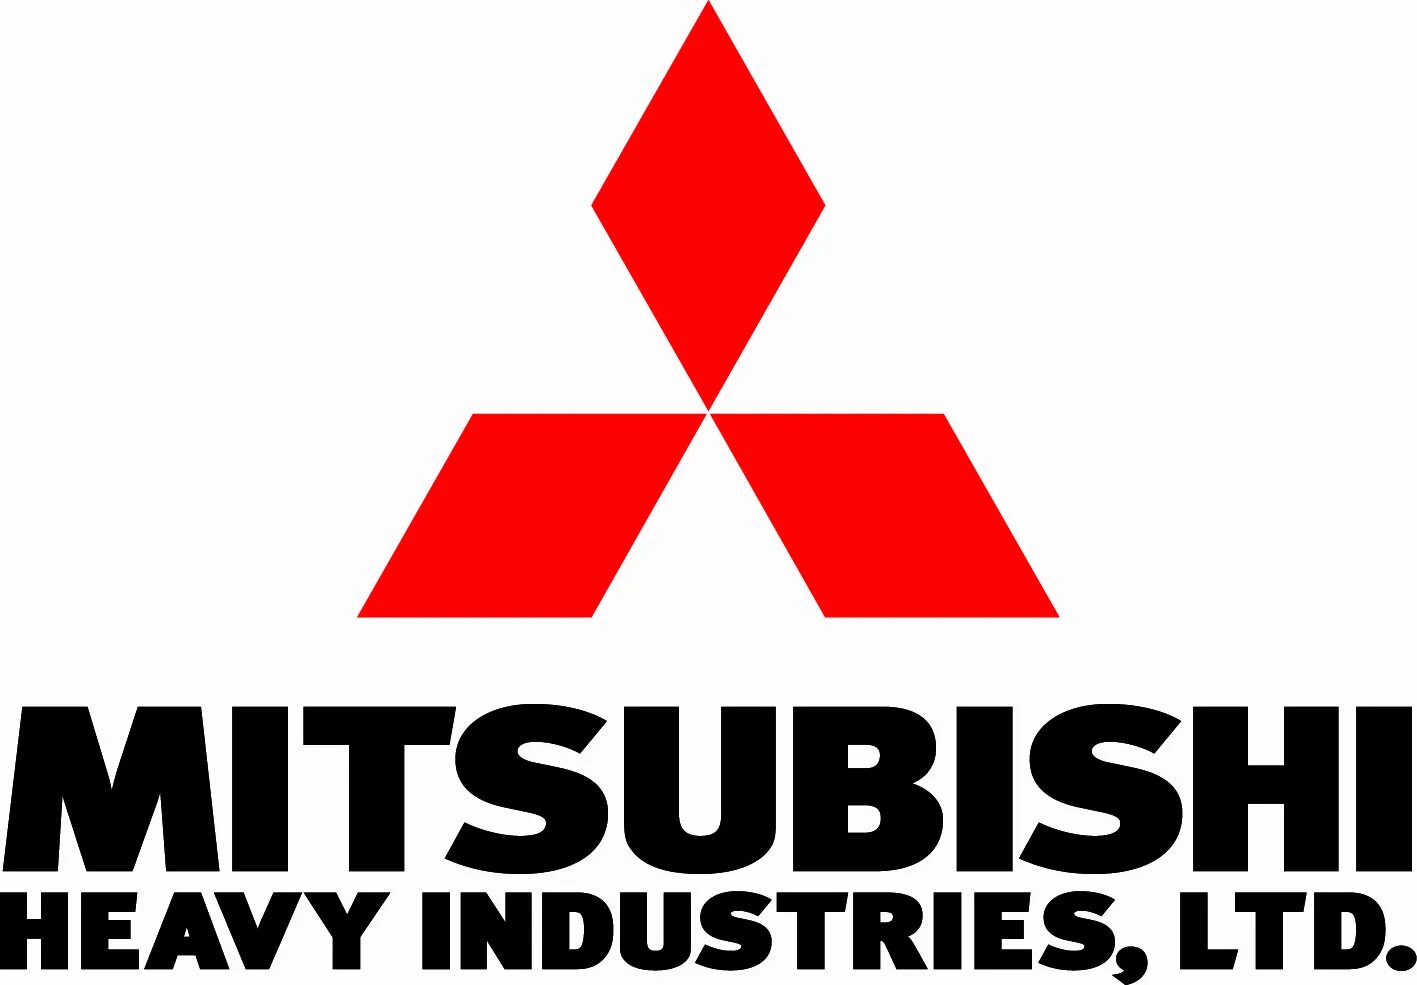 Открыть мицубиси. Митсубиси лого. Логотип Mitsubishi Motors. Mitsubishi Heavy industries Ltd. Mitsubishi надпись.